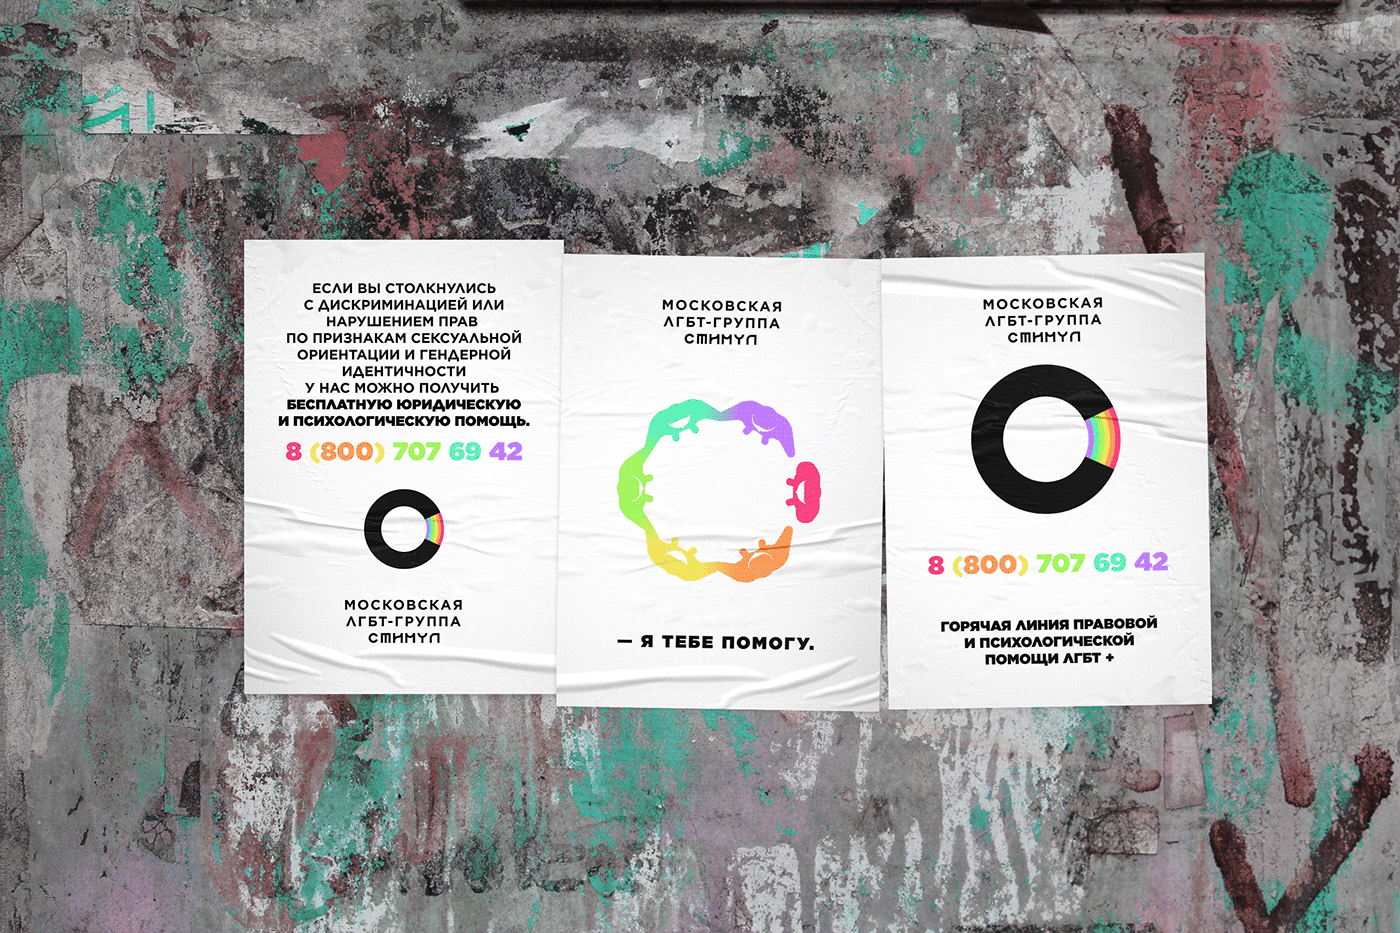 brandbook graphic design  identity LGBT LGBTQ+ logo motion graphic pride rainbow